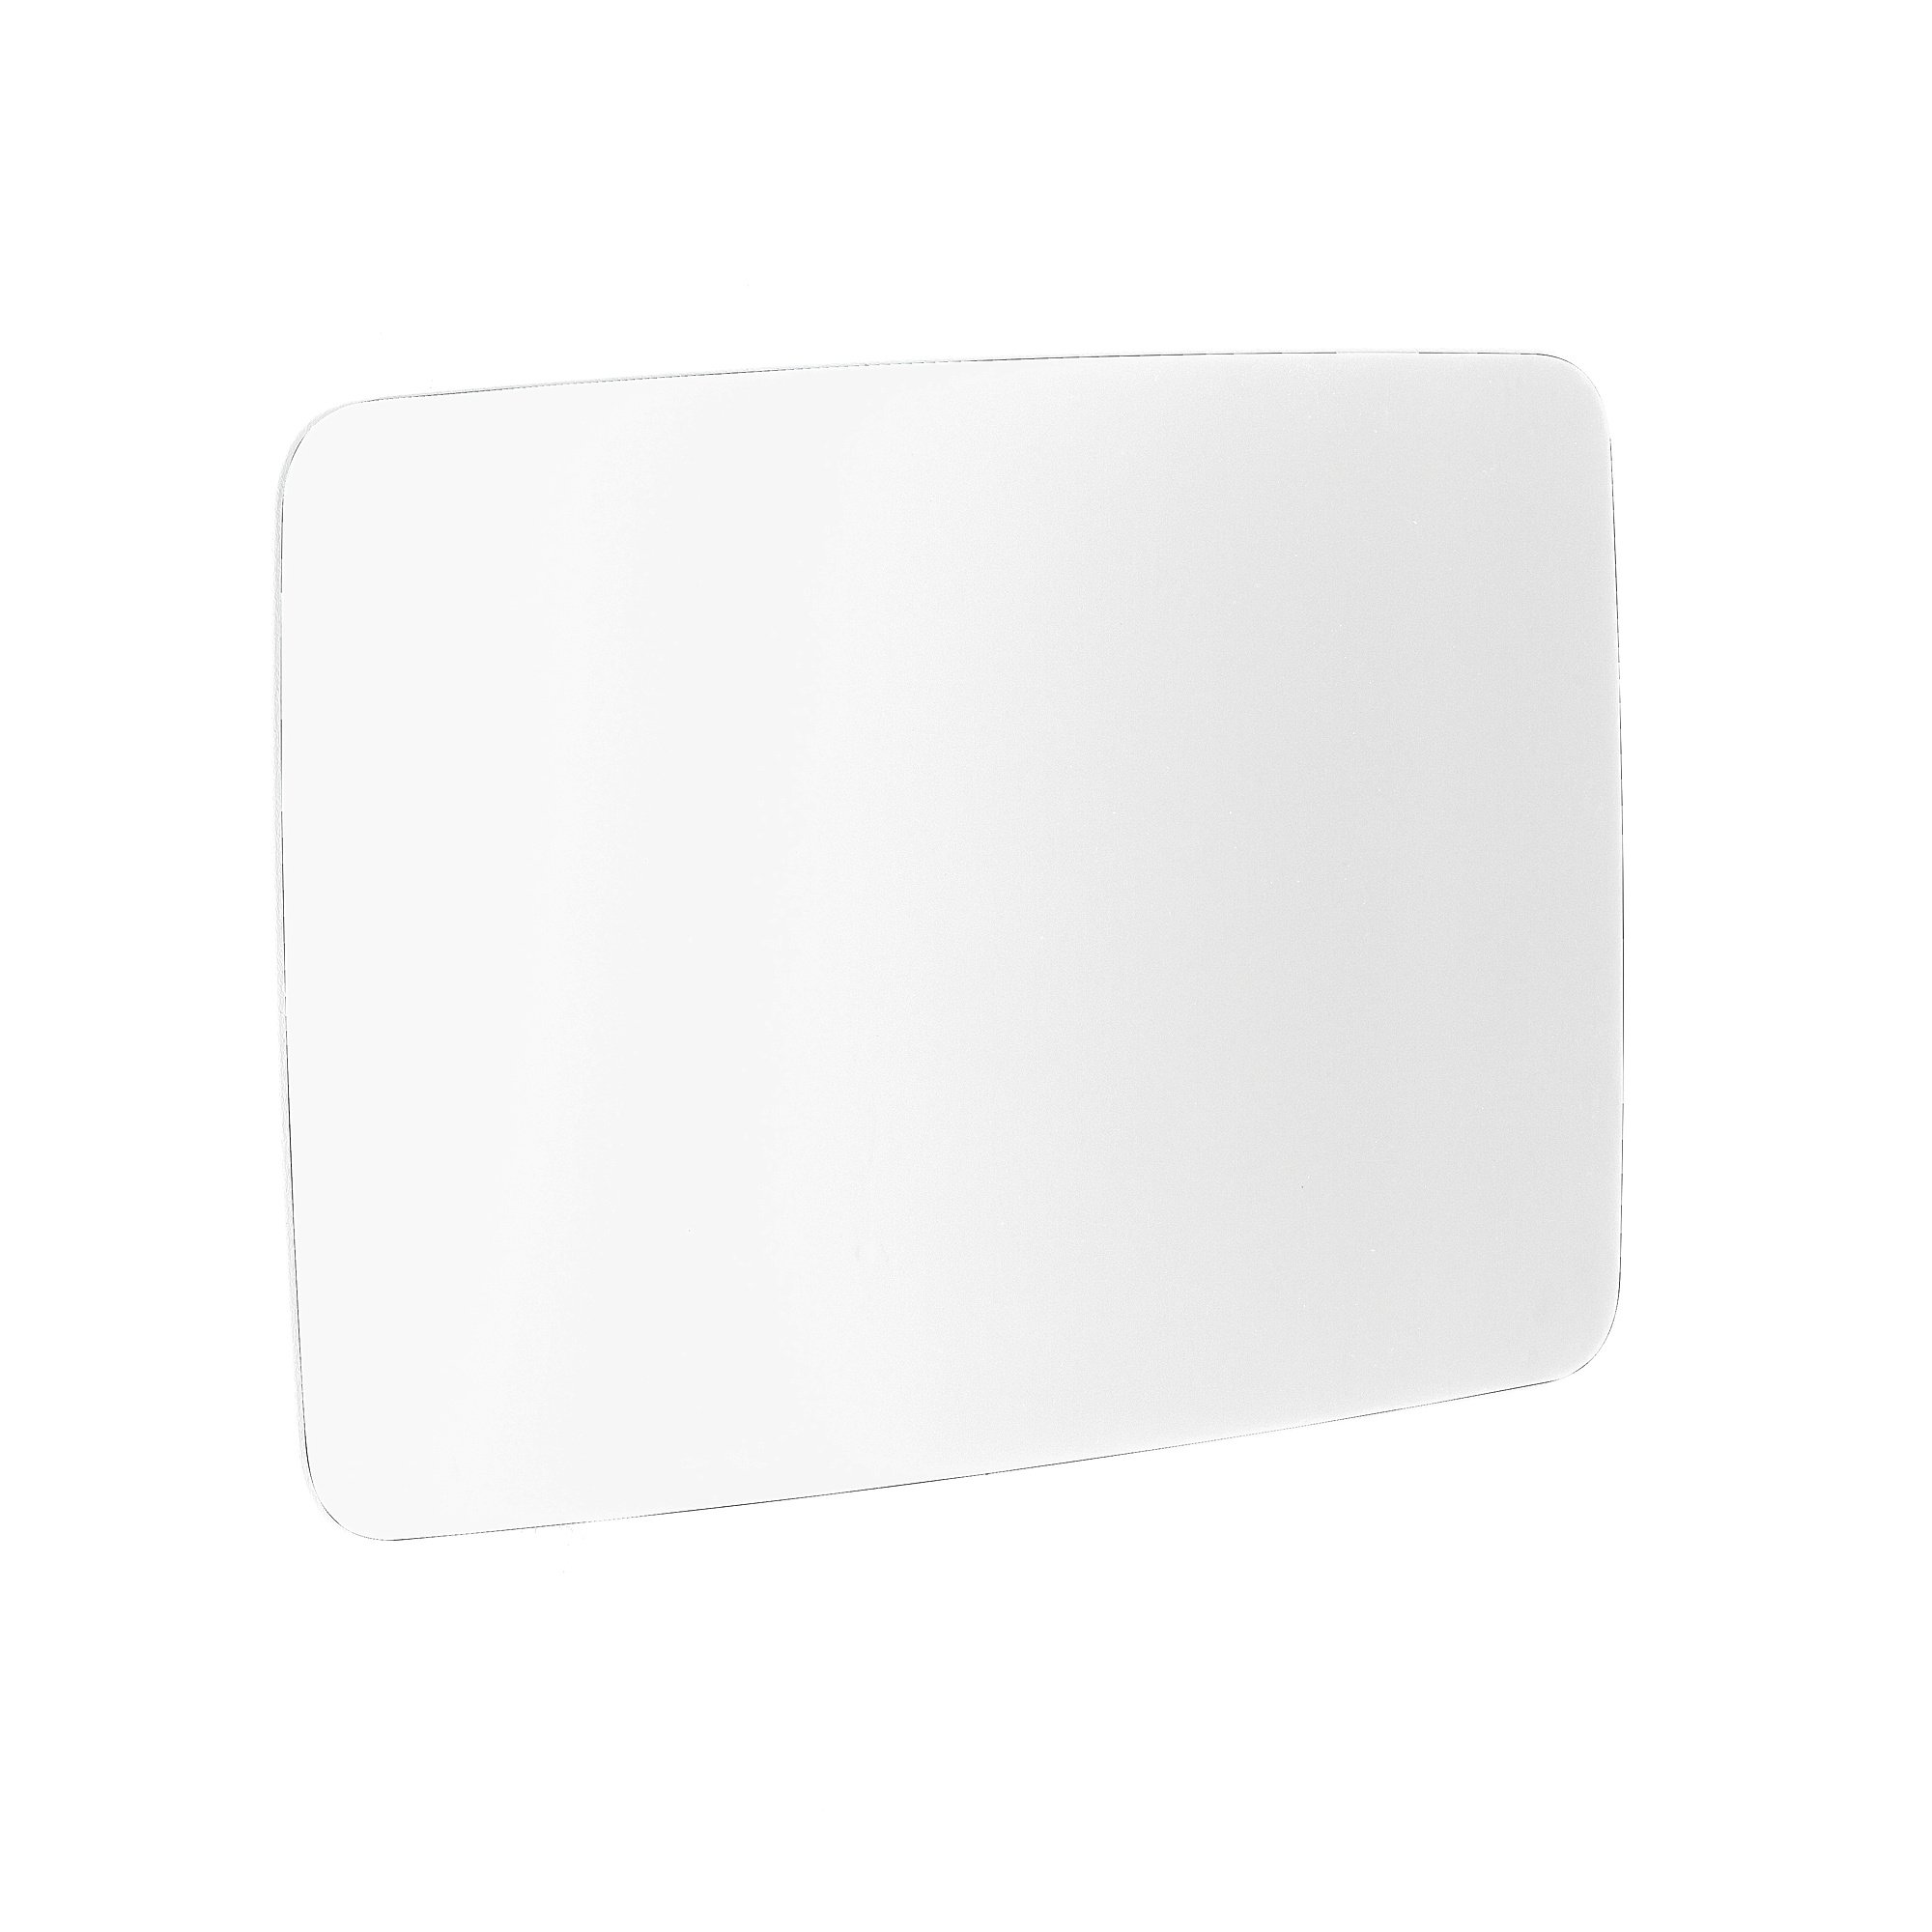 E-shop Sklenená magnetická tabuľa STELLA, so zaoblenými rohmi, 1500x1000 mm, biela